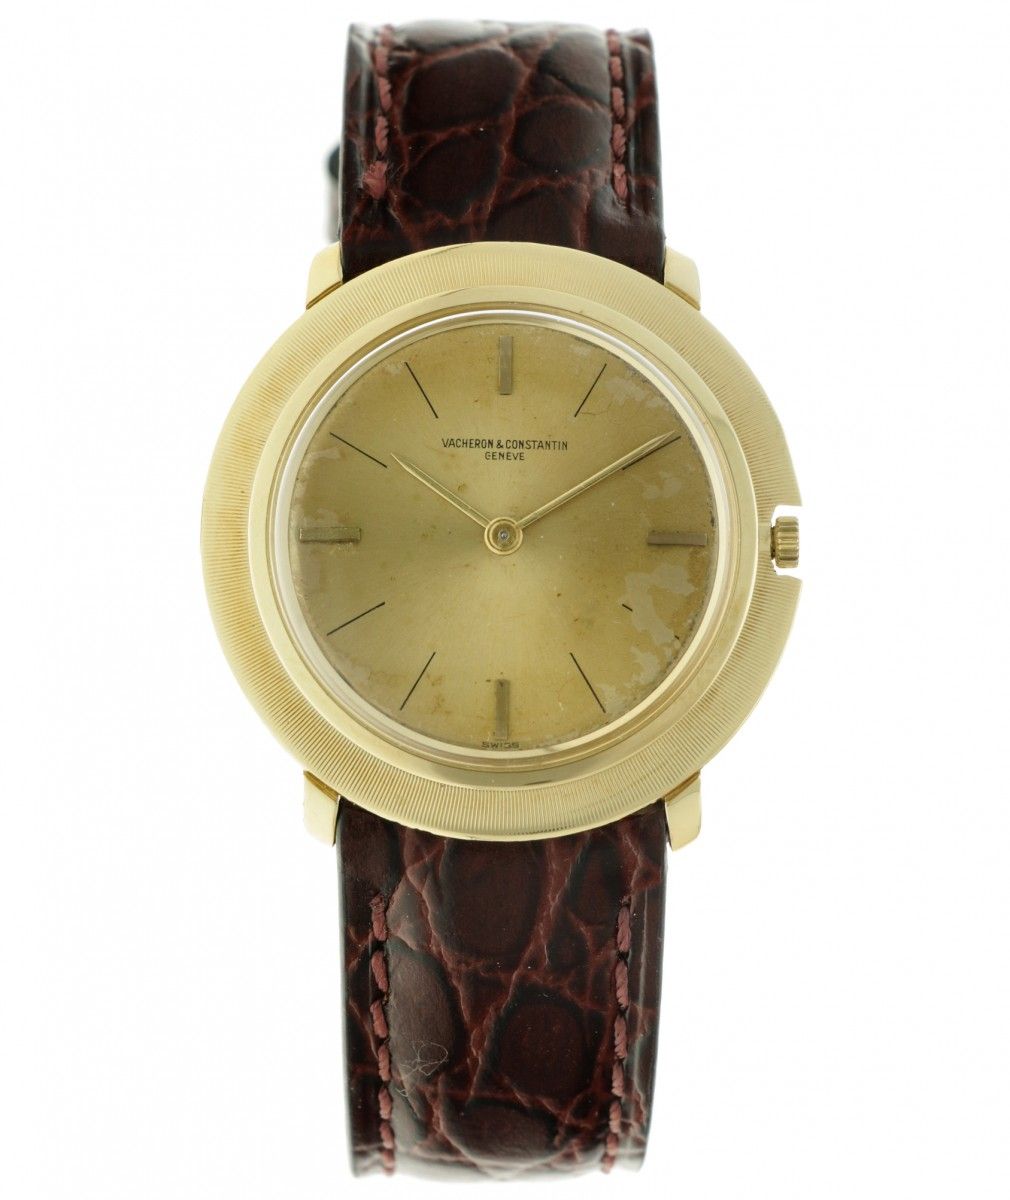 Vacheron & Constantin 6335 - Men's watch - apprx. 1960. Case: yellow gold (18 kt&hellip;